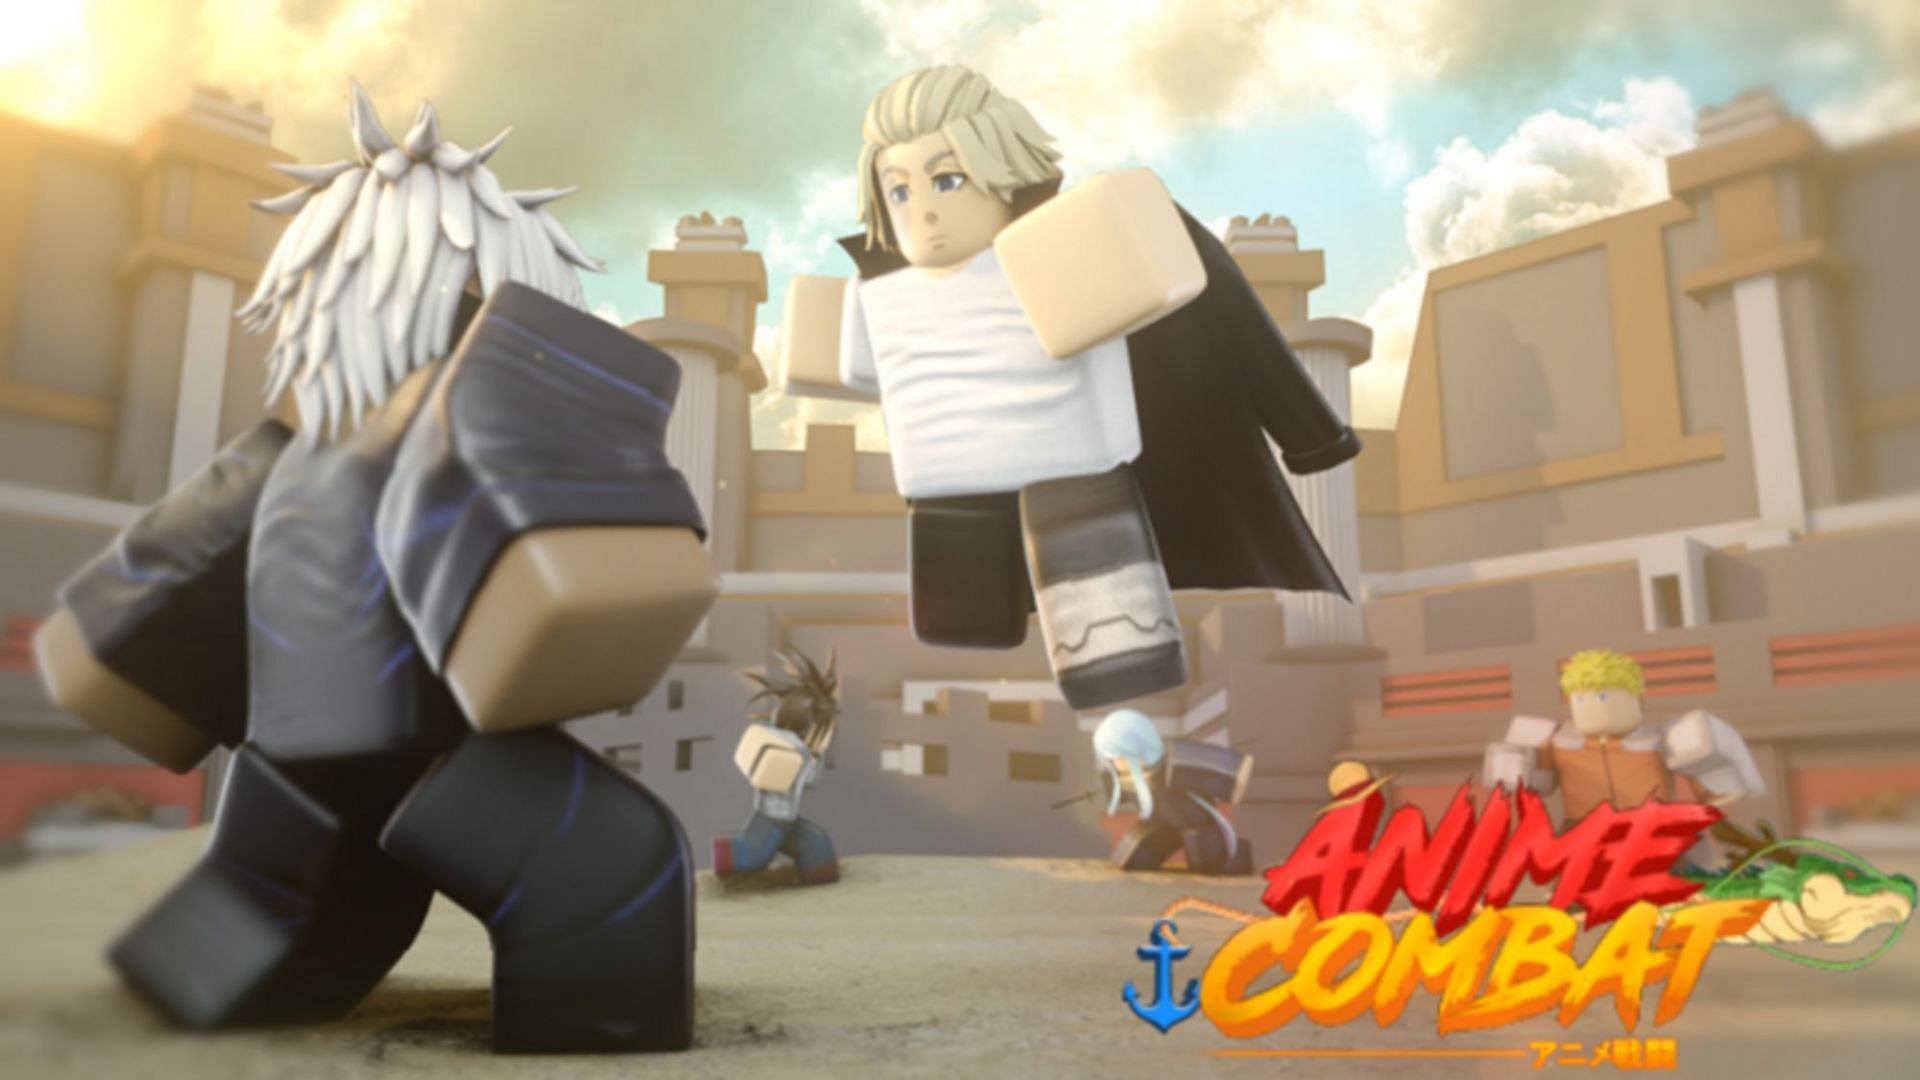 Train new fighters and obtain relics in Anime Combat Simulator (Image via Roblox)